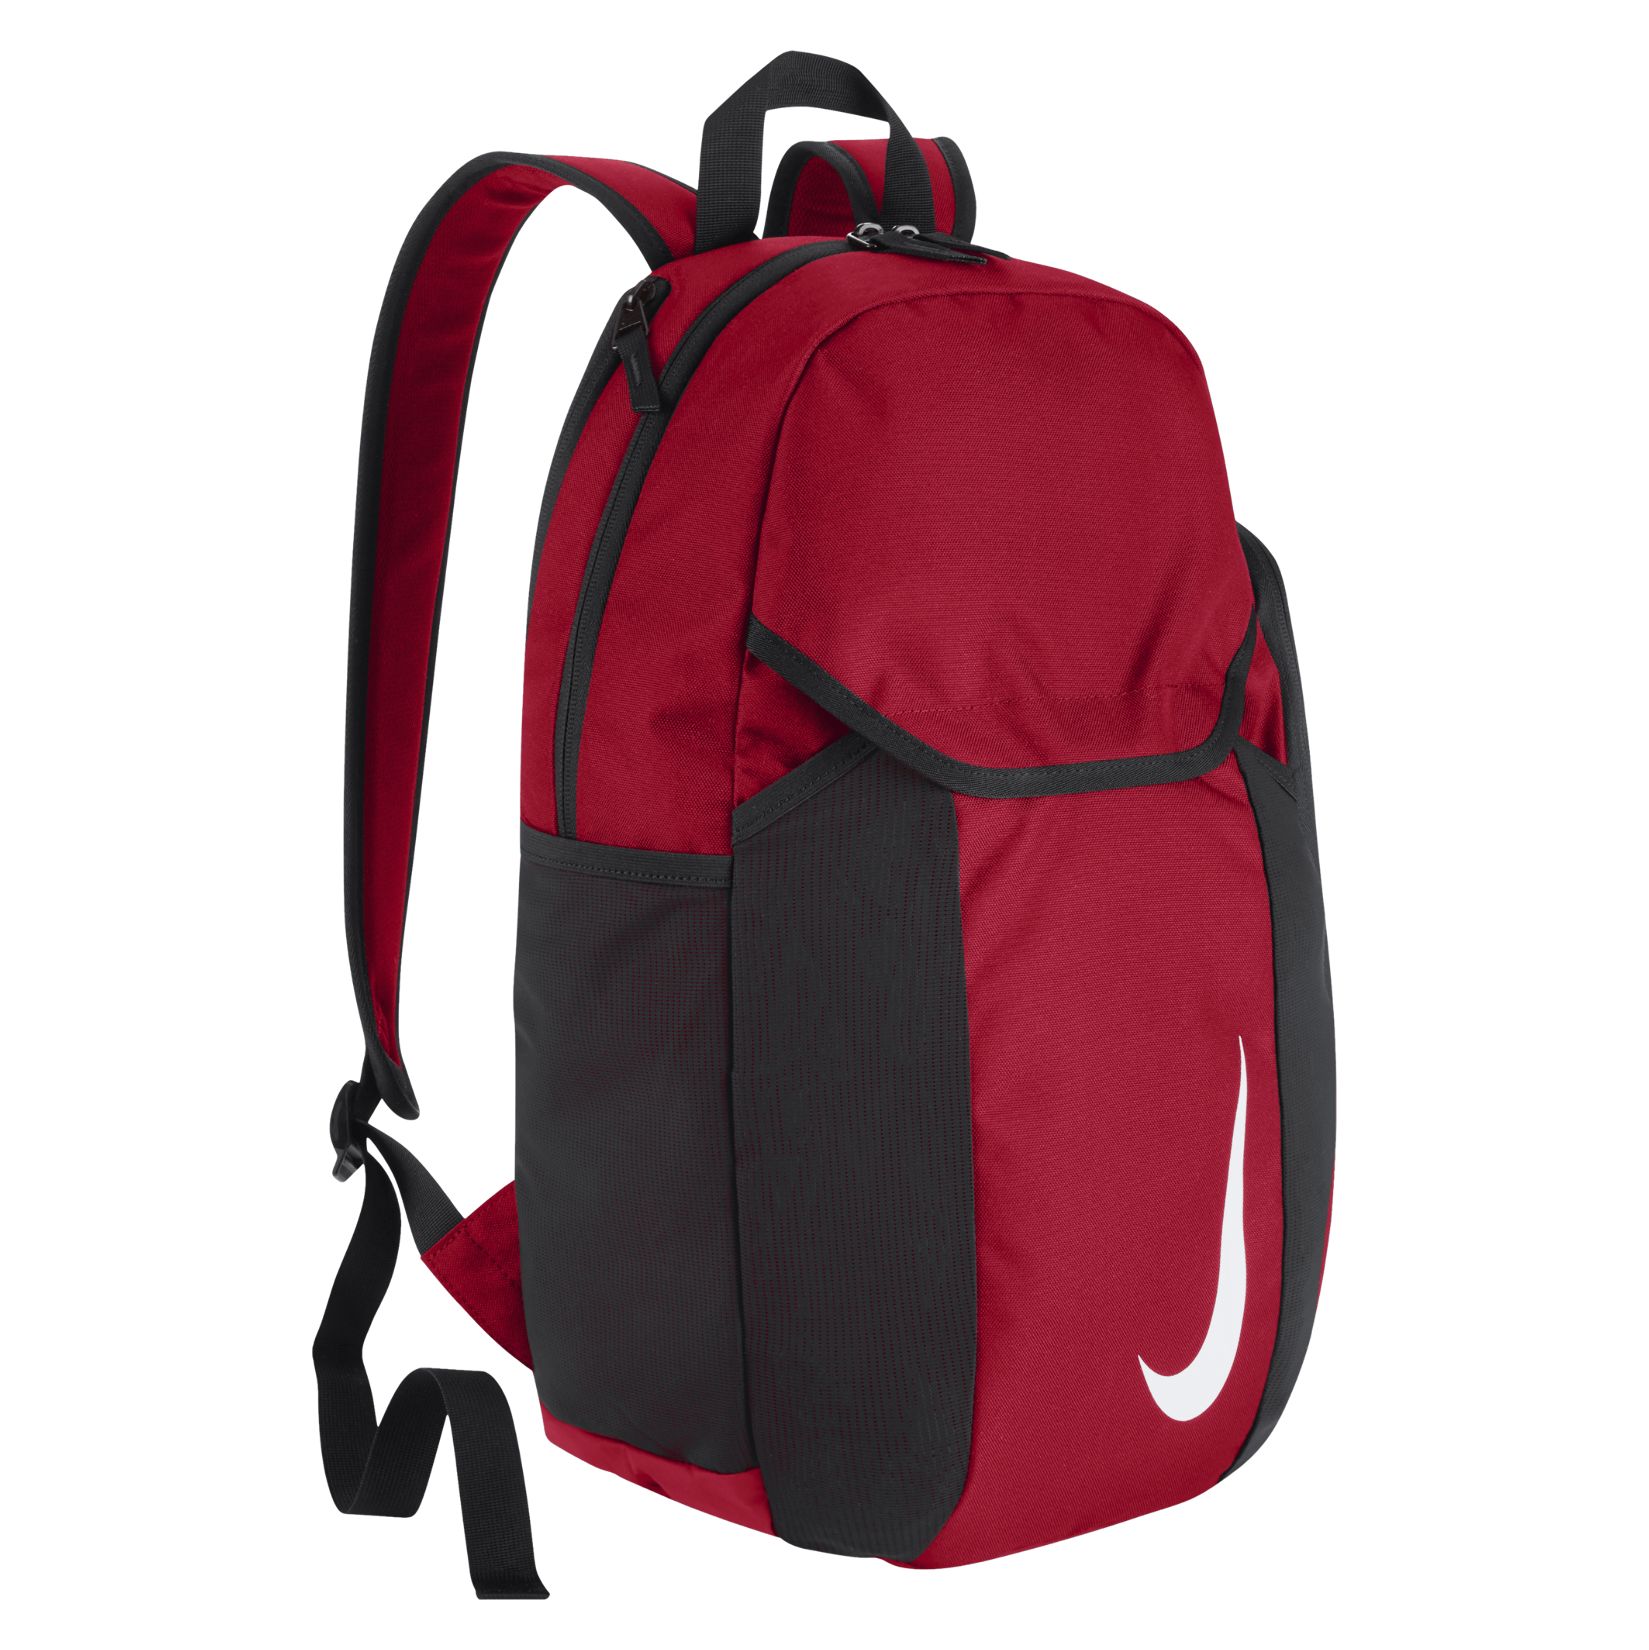 Nike Academy Team Backpack University Red-Black-White